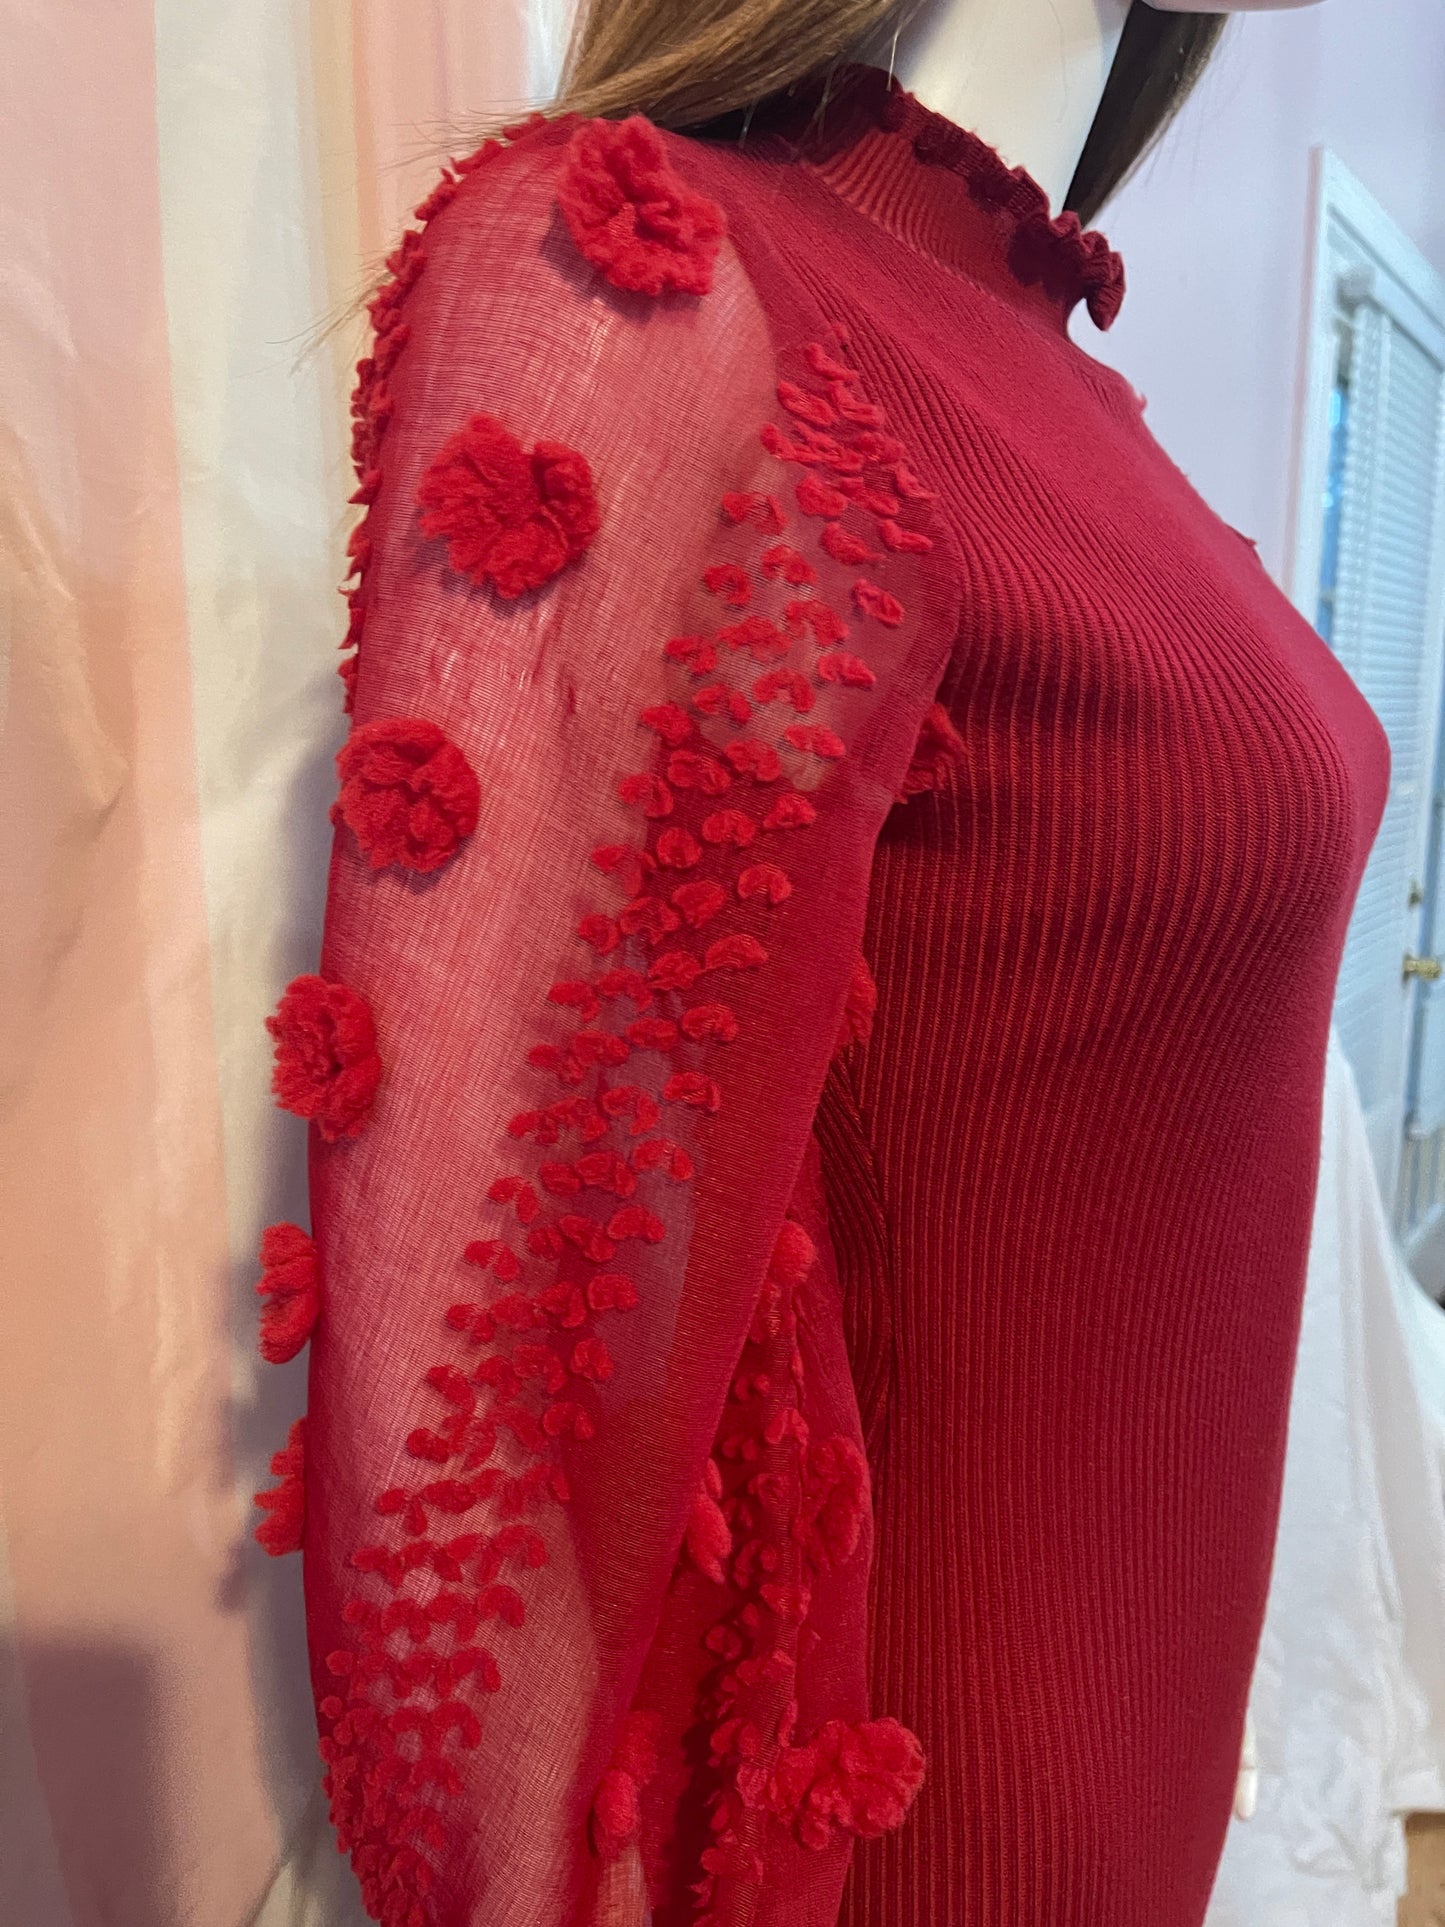 Red Lace Knit Sweater Dress